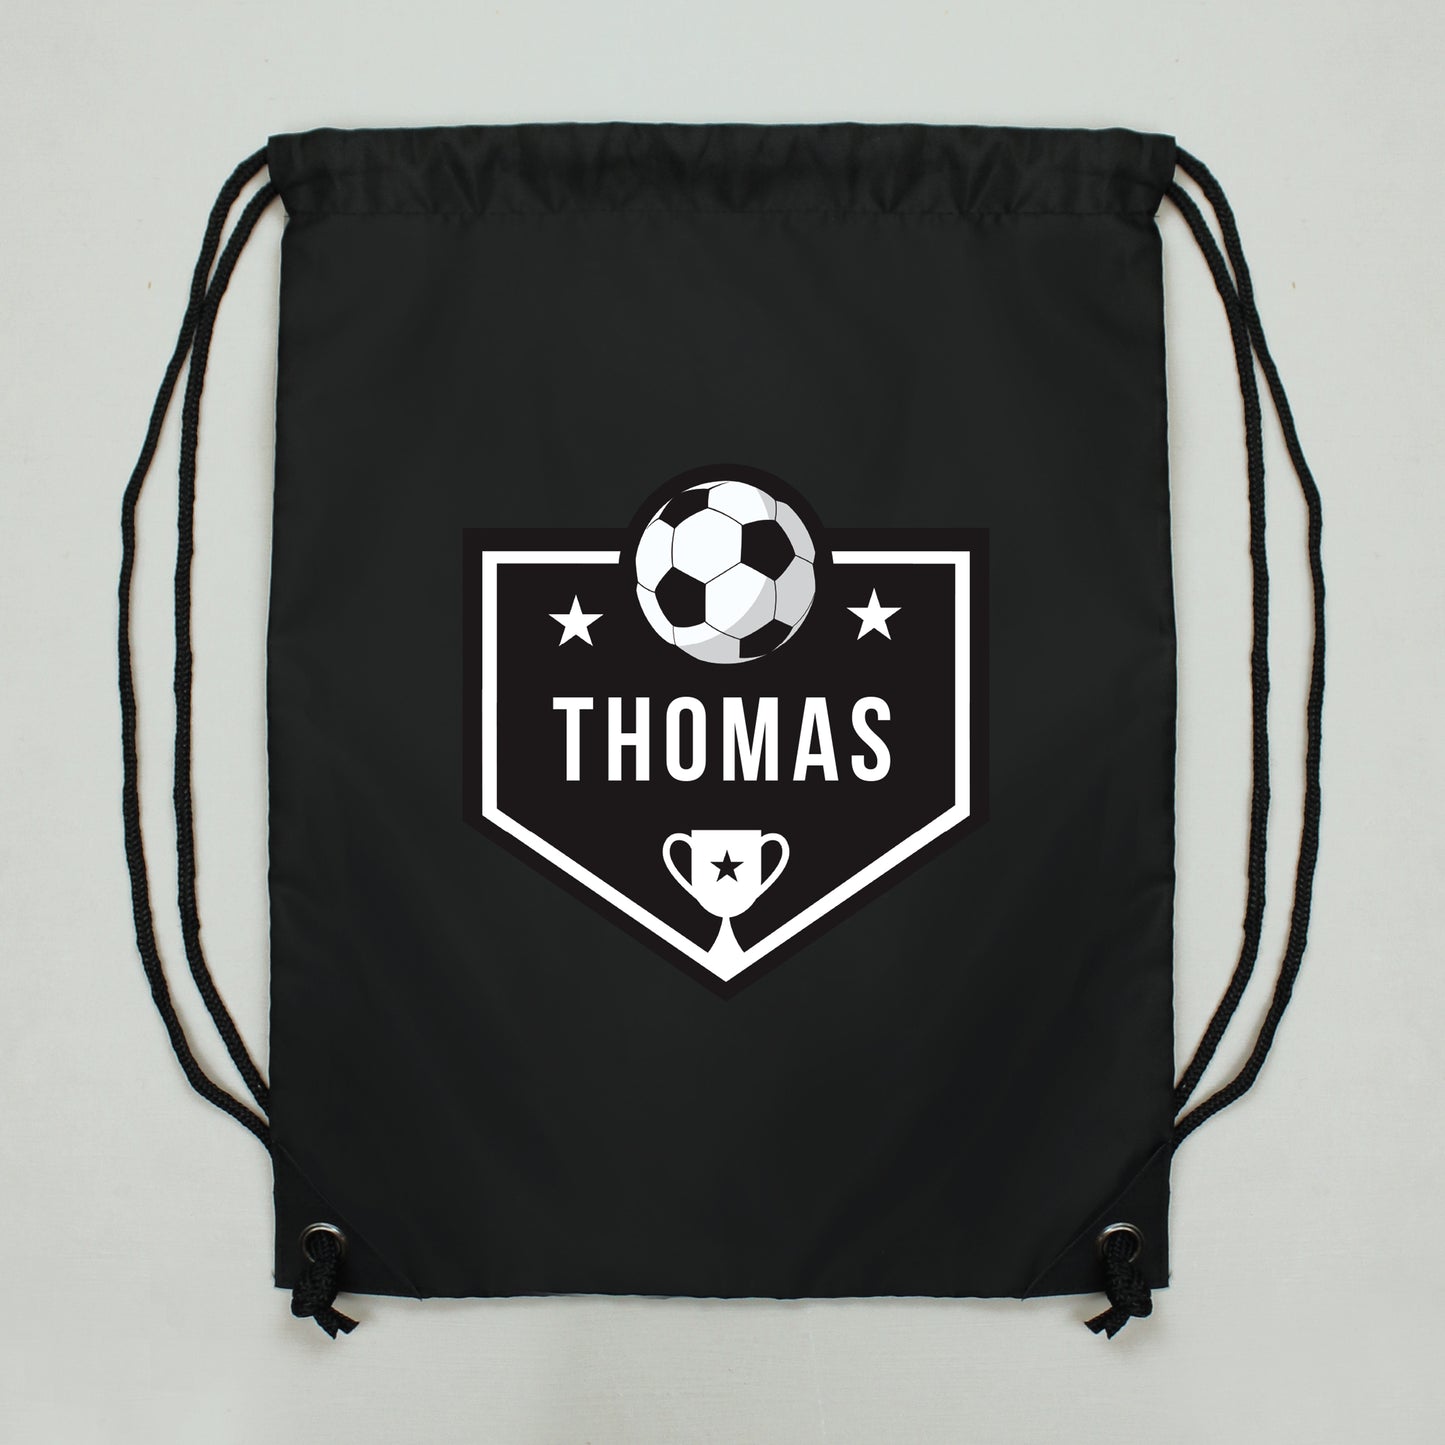 Personalised Football Swimming, Gym or Kit Bag - Black